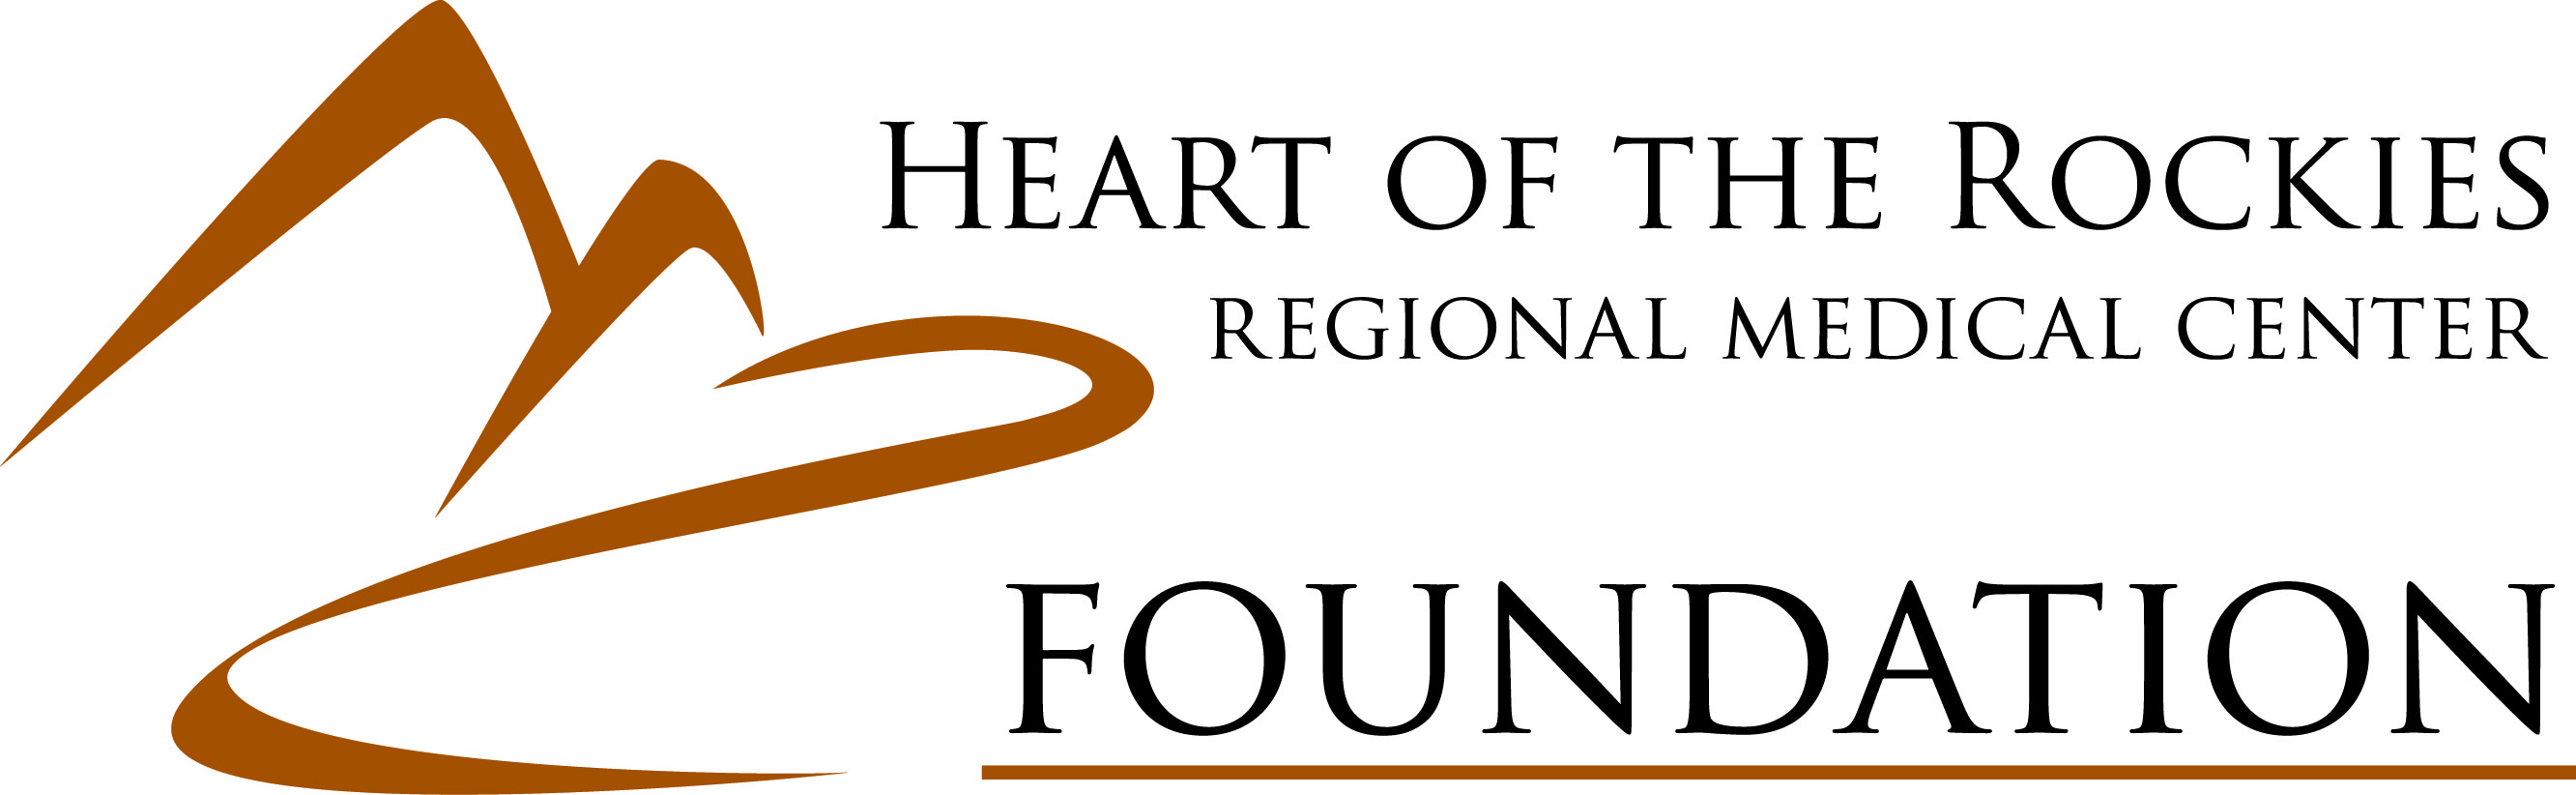 hrrmc foundation logo